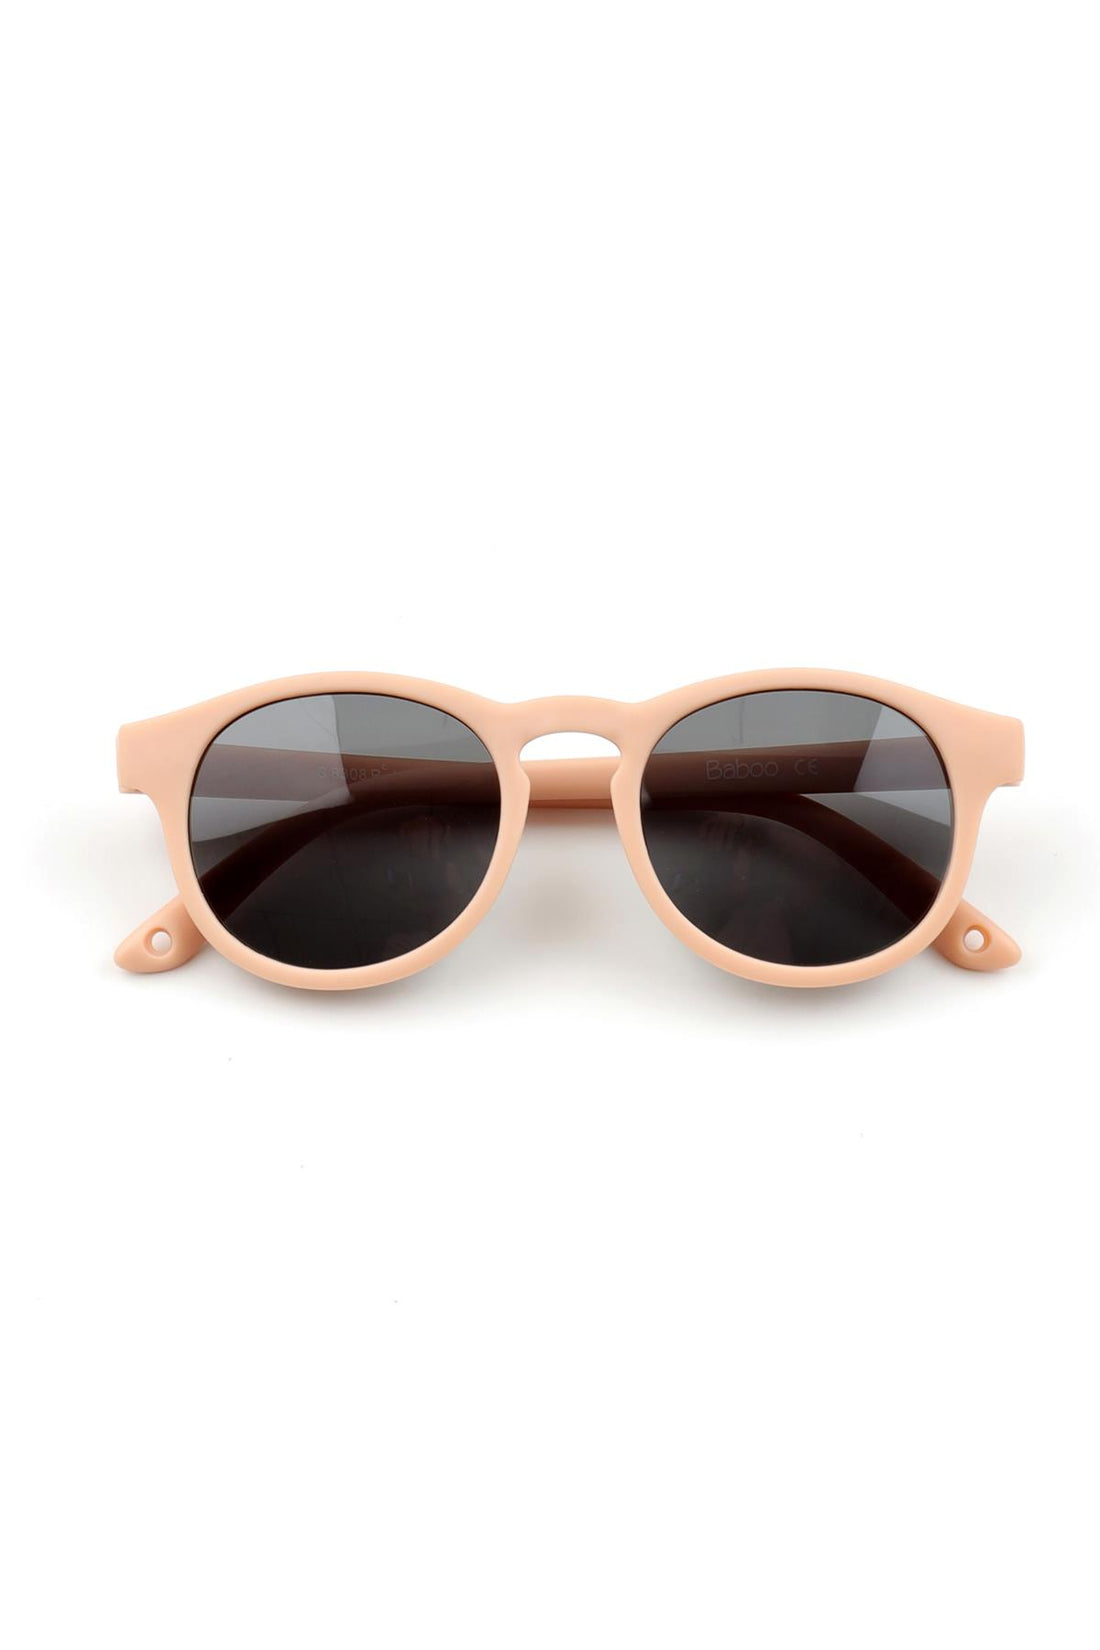 Ultra Light Midi Size Children's Sunglasses Pink